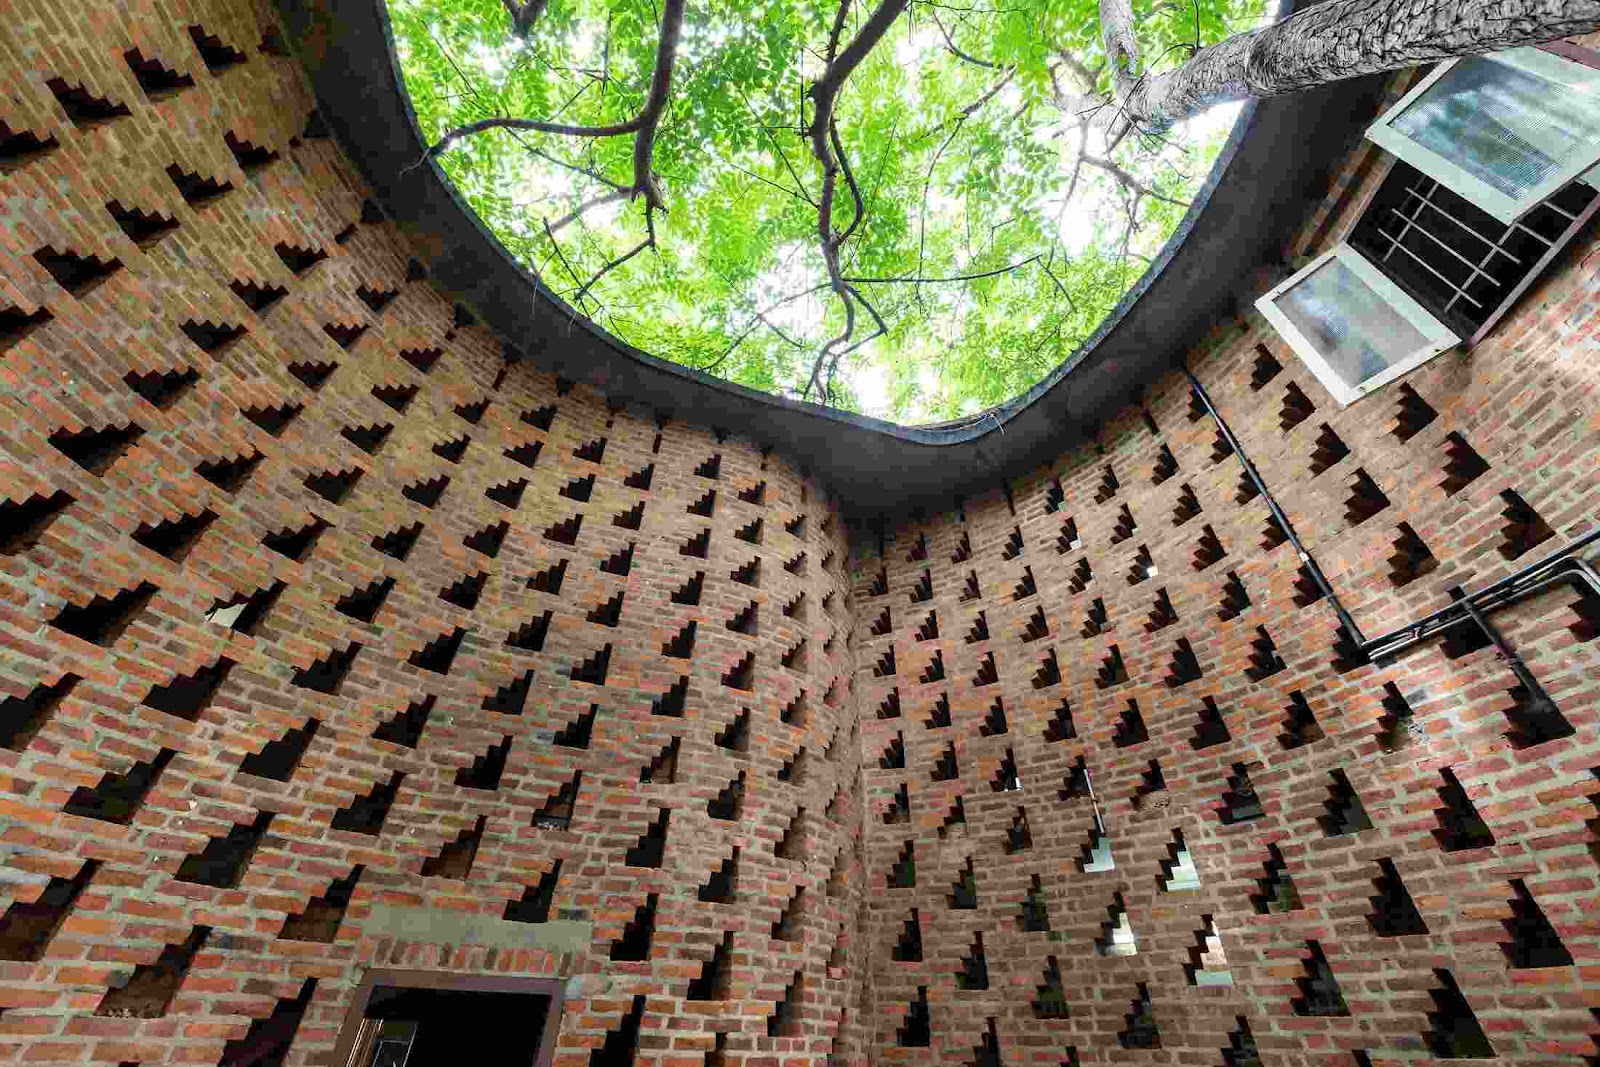 Centre for Development Studies - Brick in modern architecture - image 4.jpg